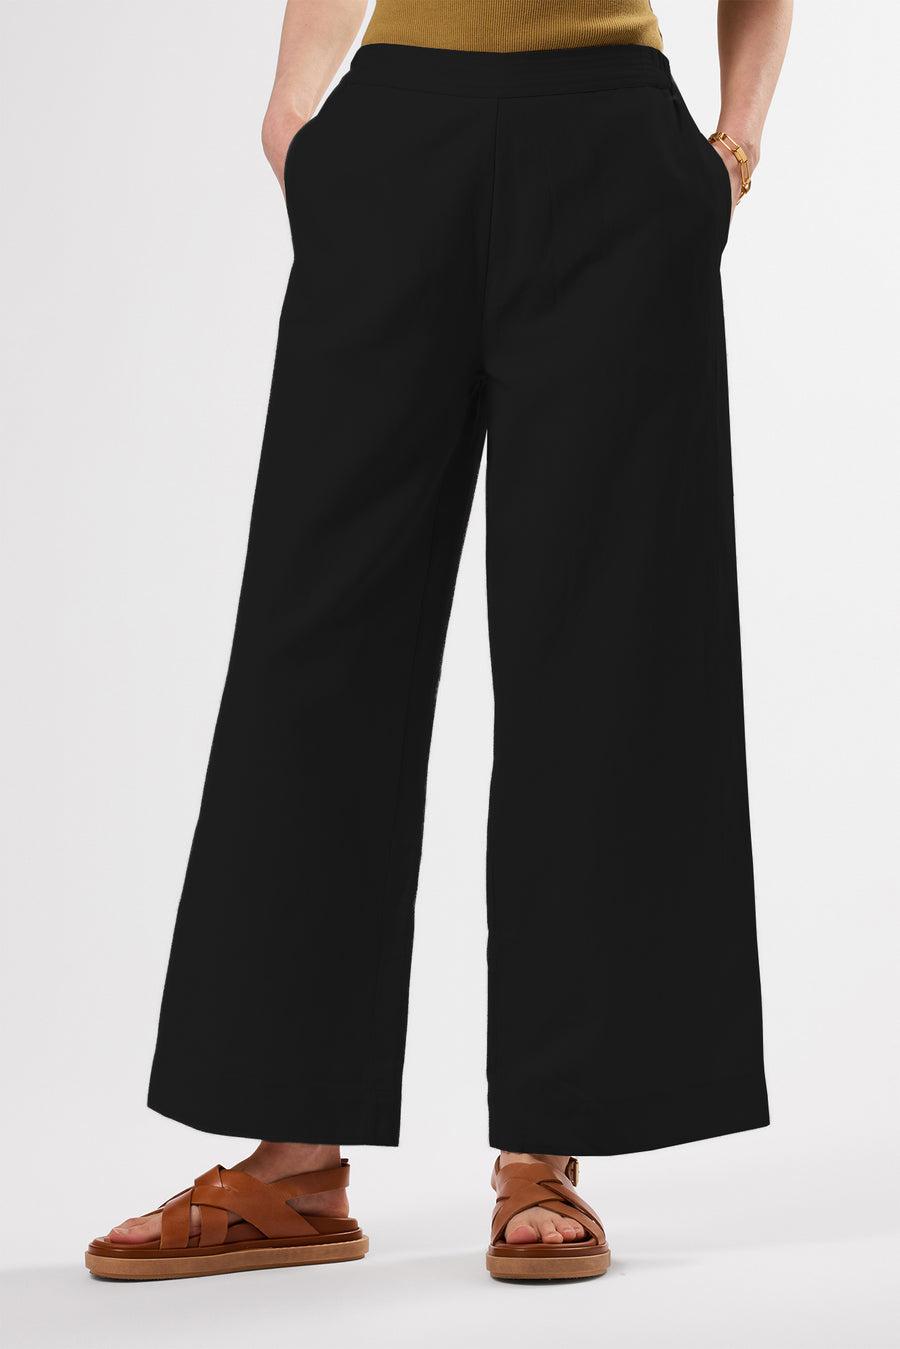 Malia Linen Pant - Black